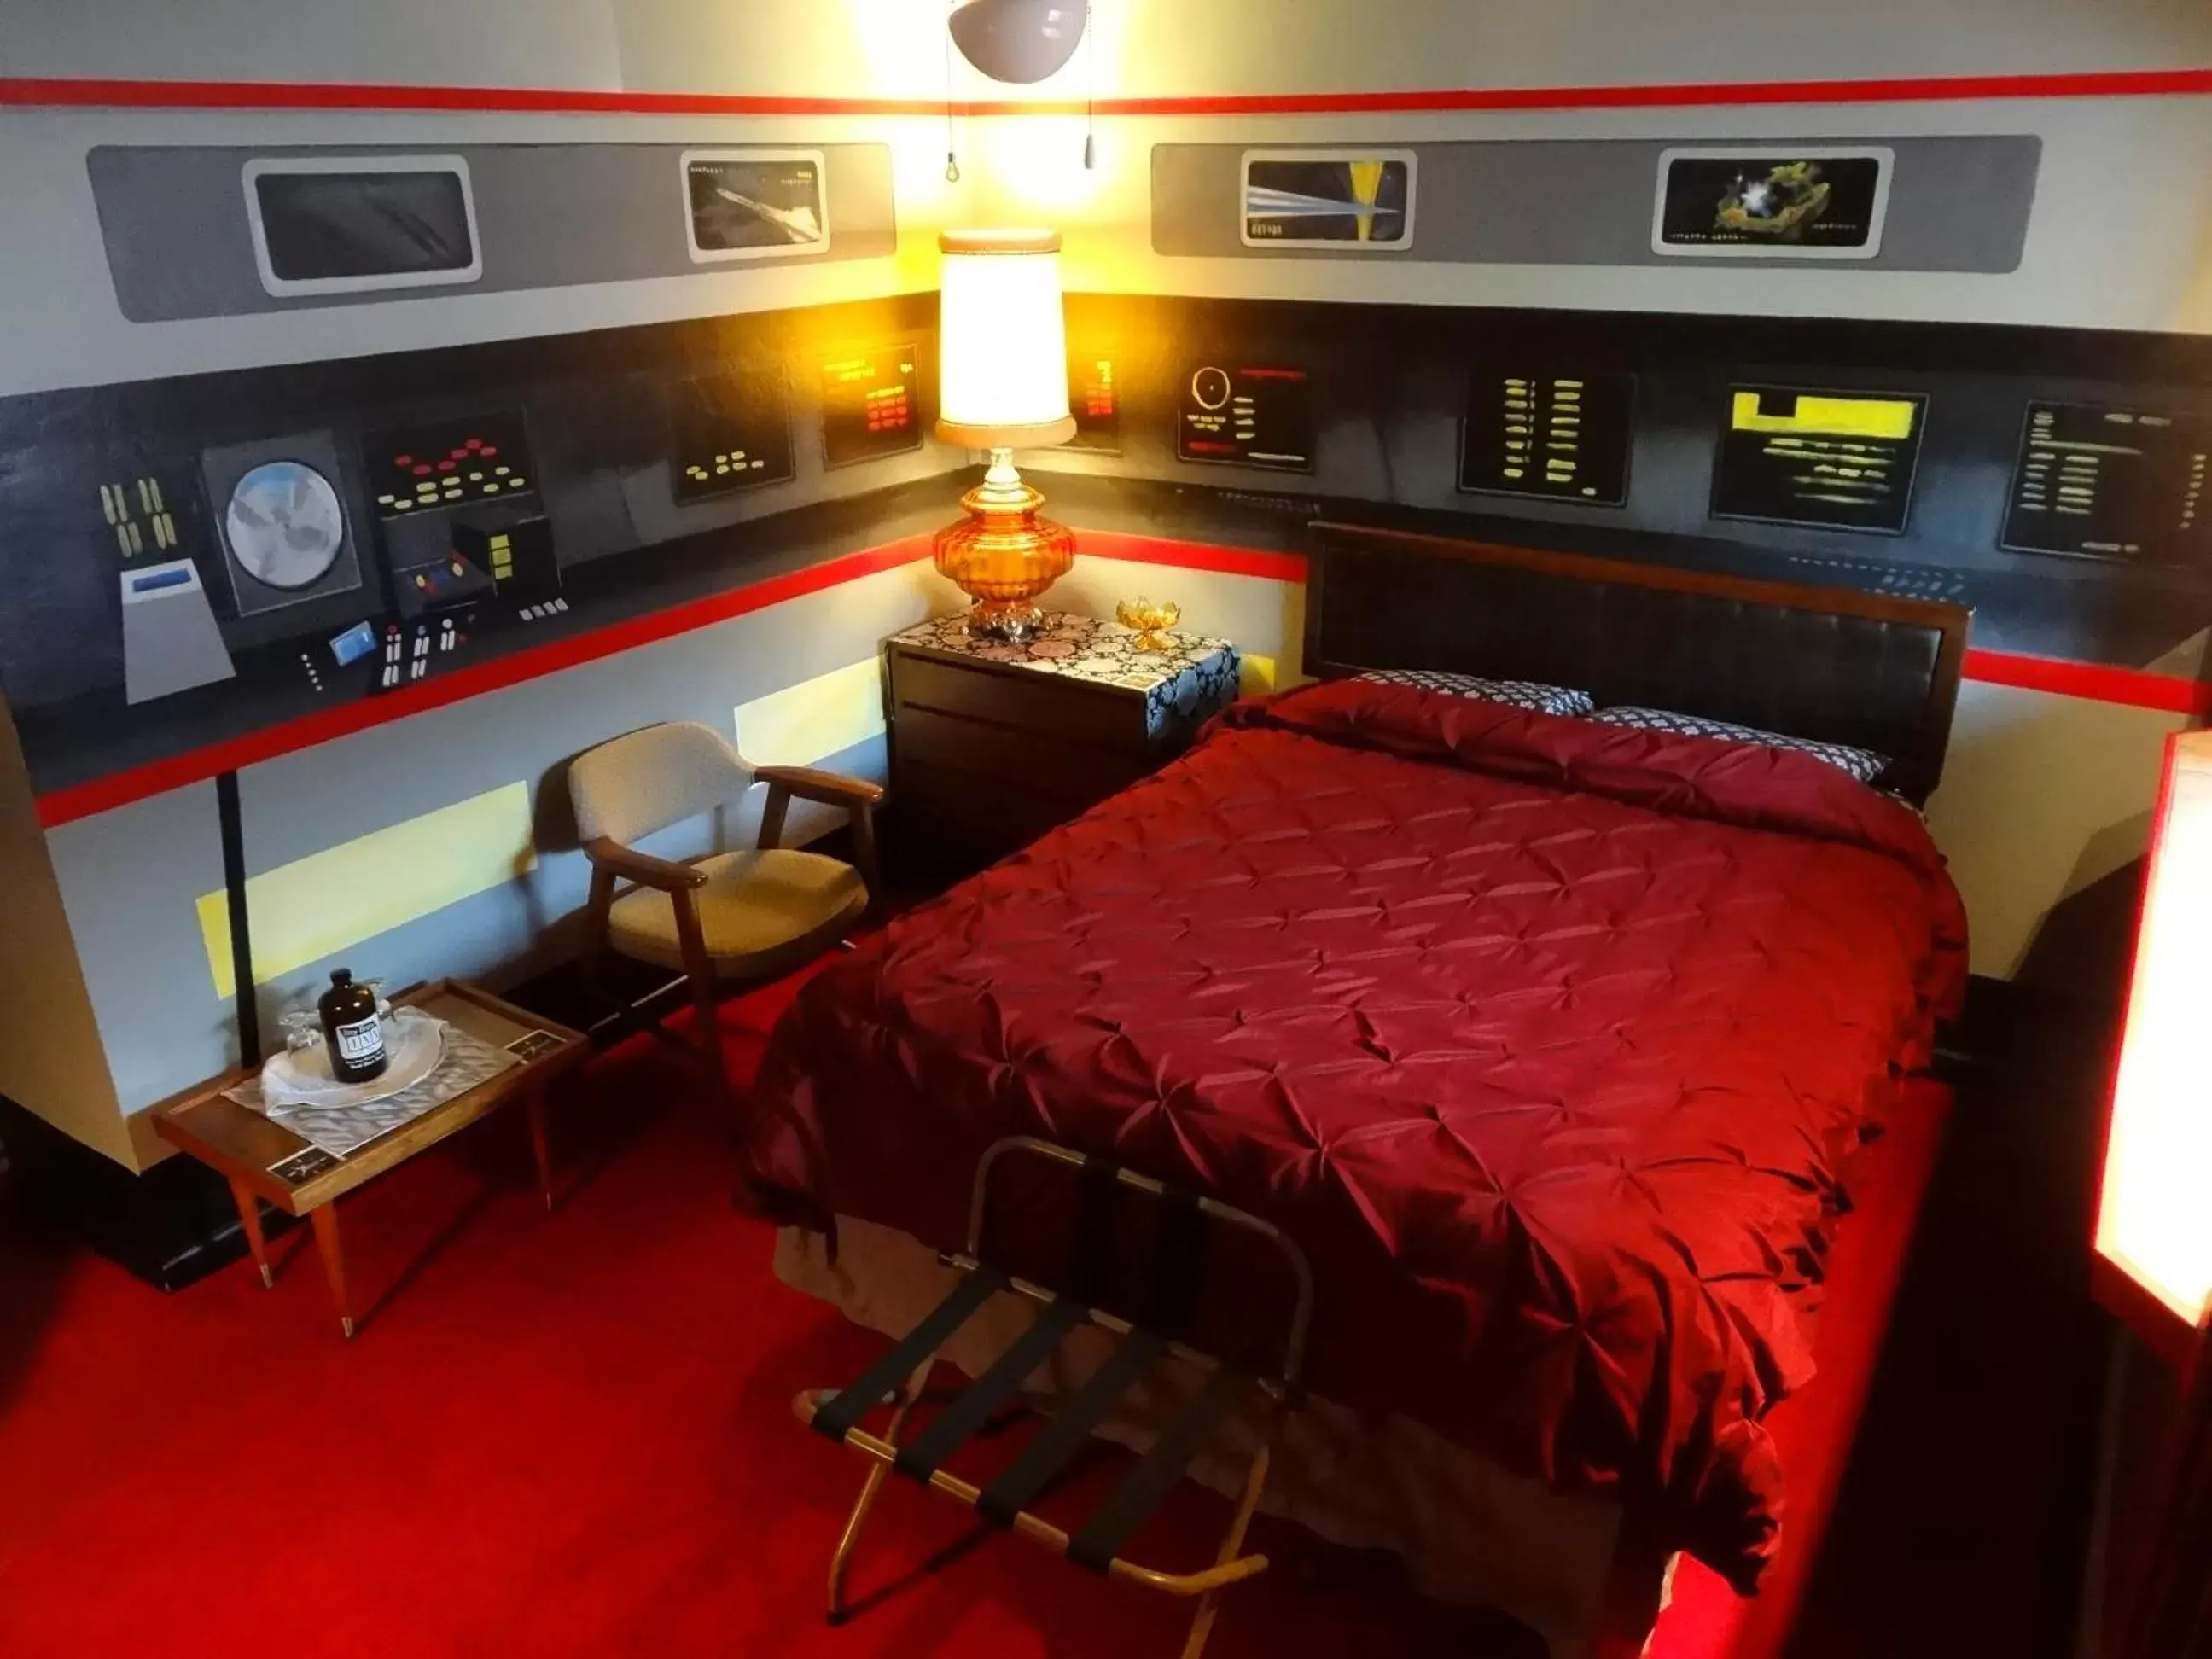 The Star Trek - USS Enterprise Room at the Itty Bitty Inn